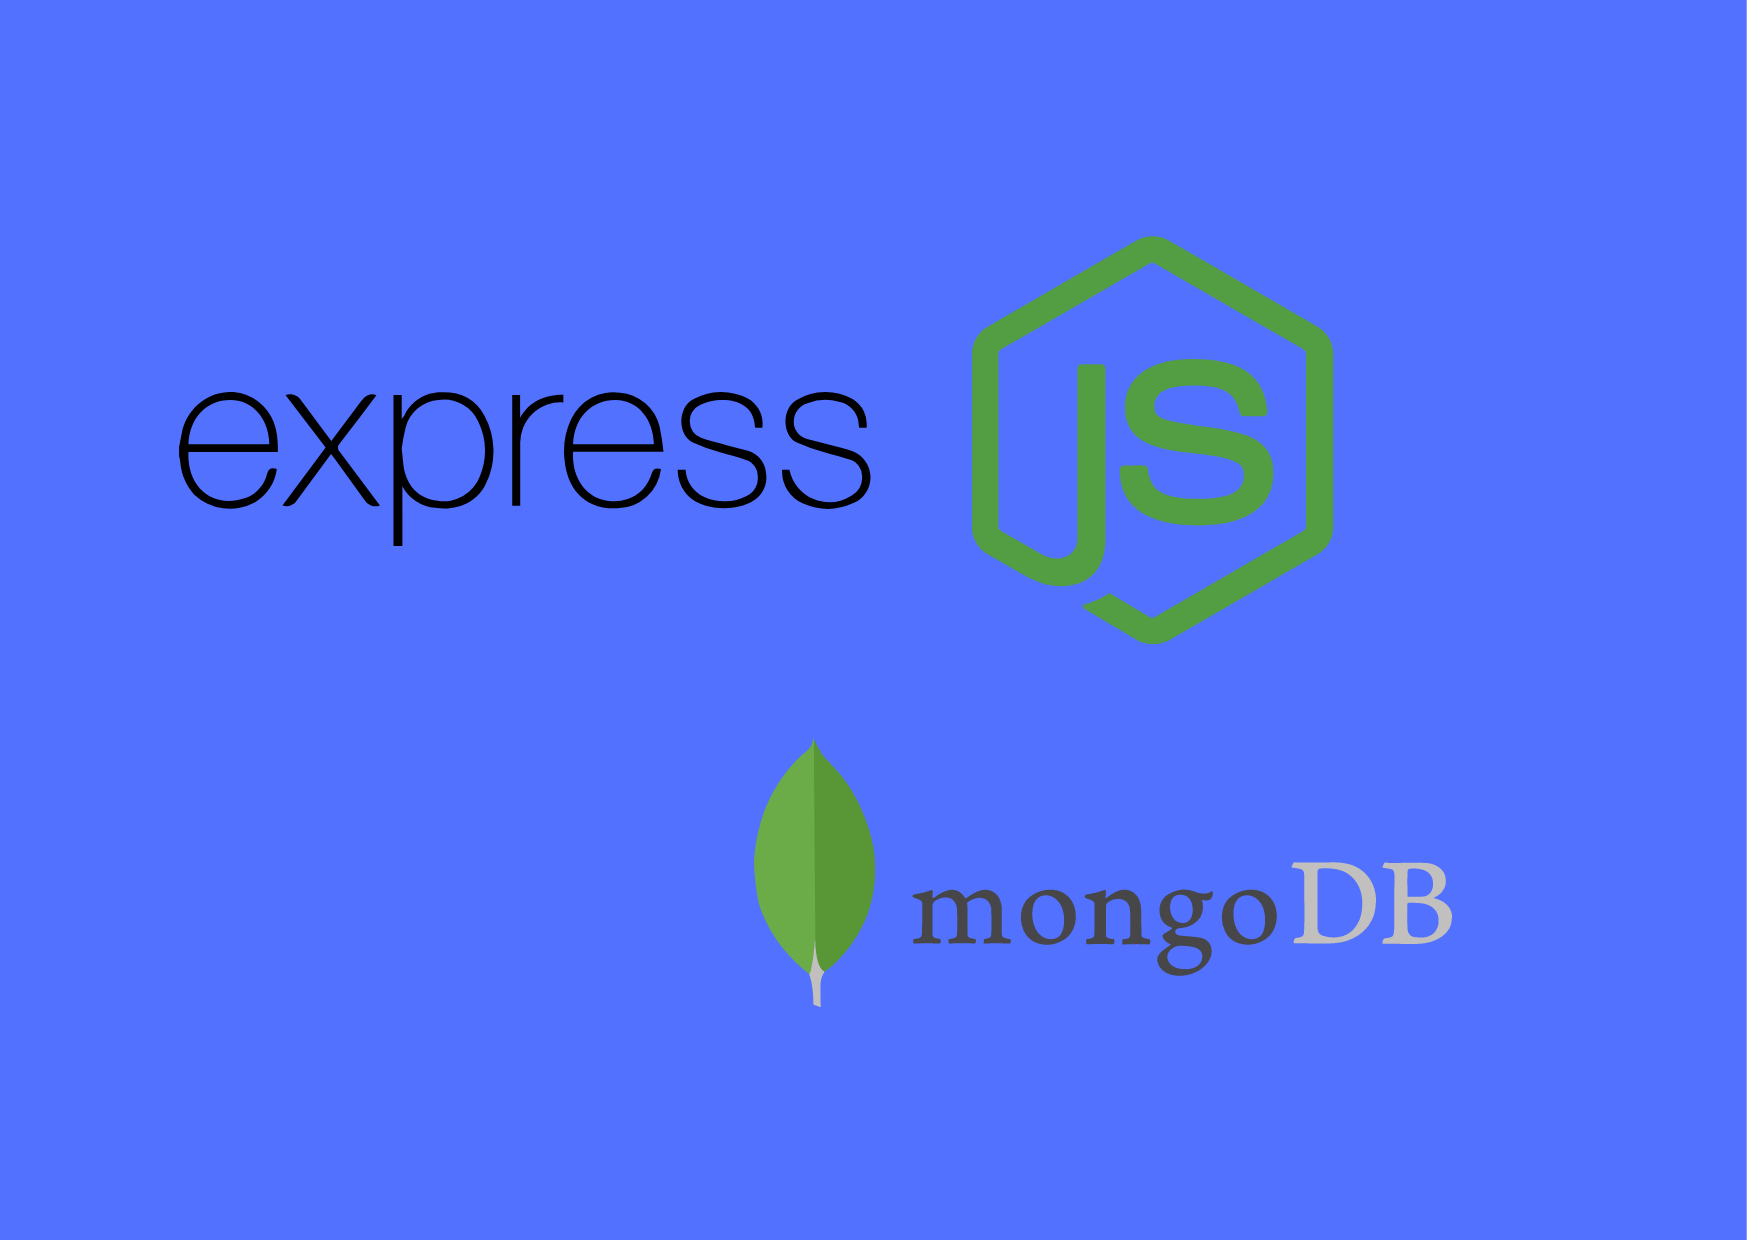 express mongo